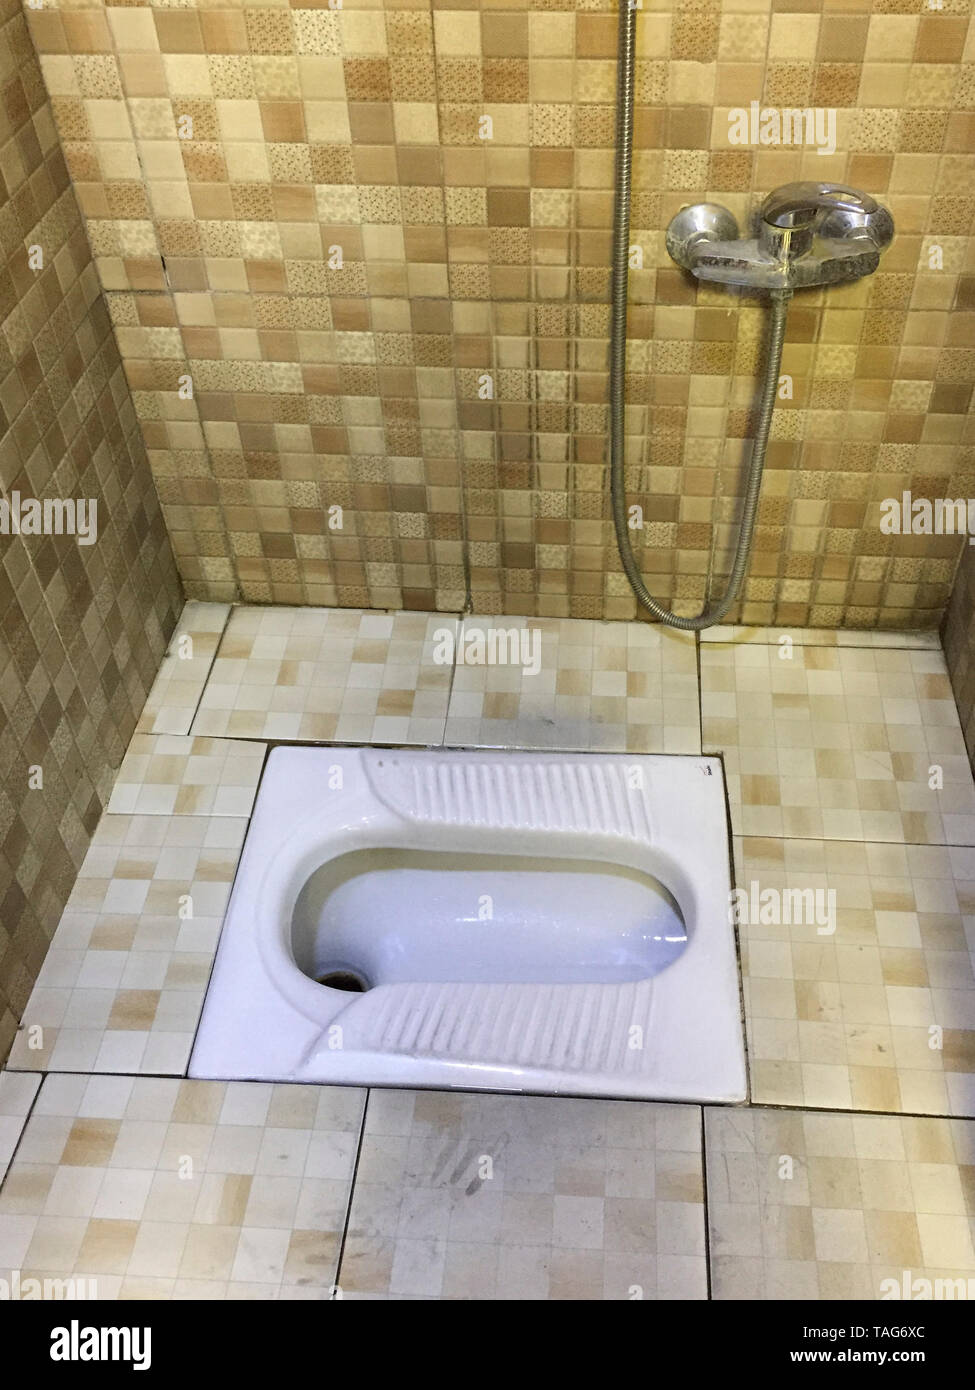 Asian Squat Toilet Shown in Tiled Restroom Stock Photo - Alamy